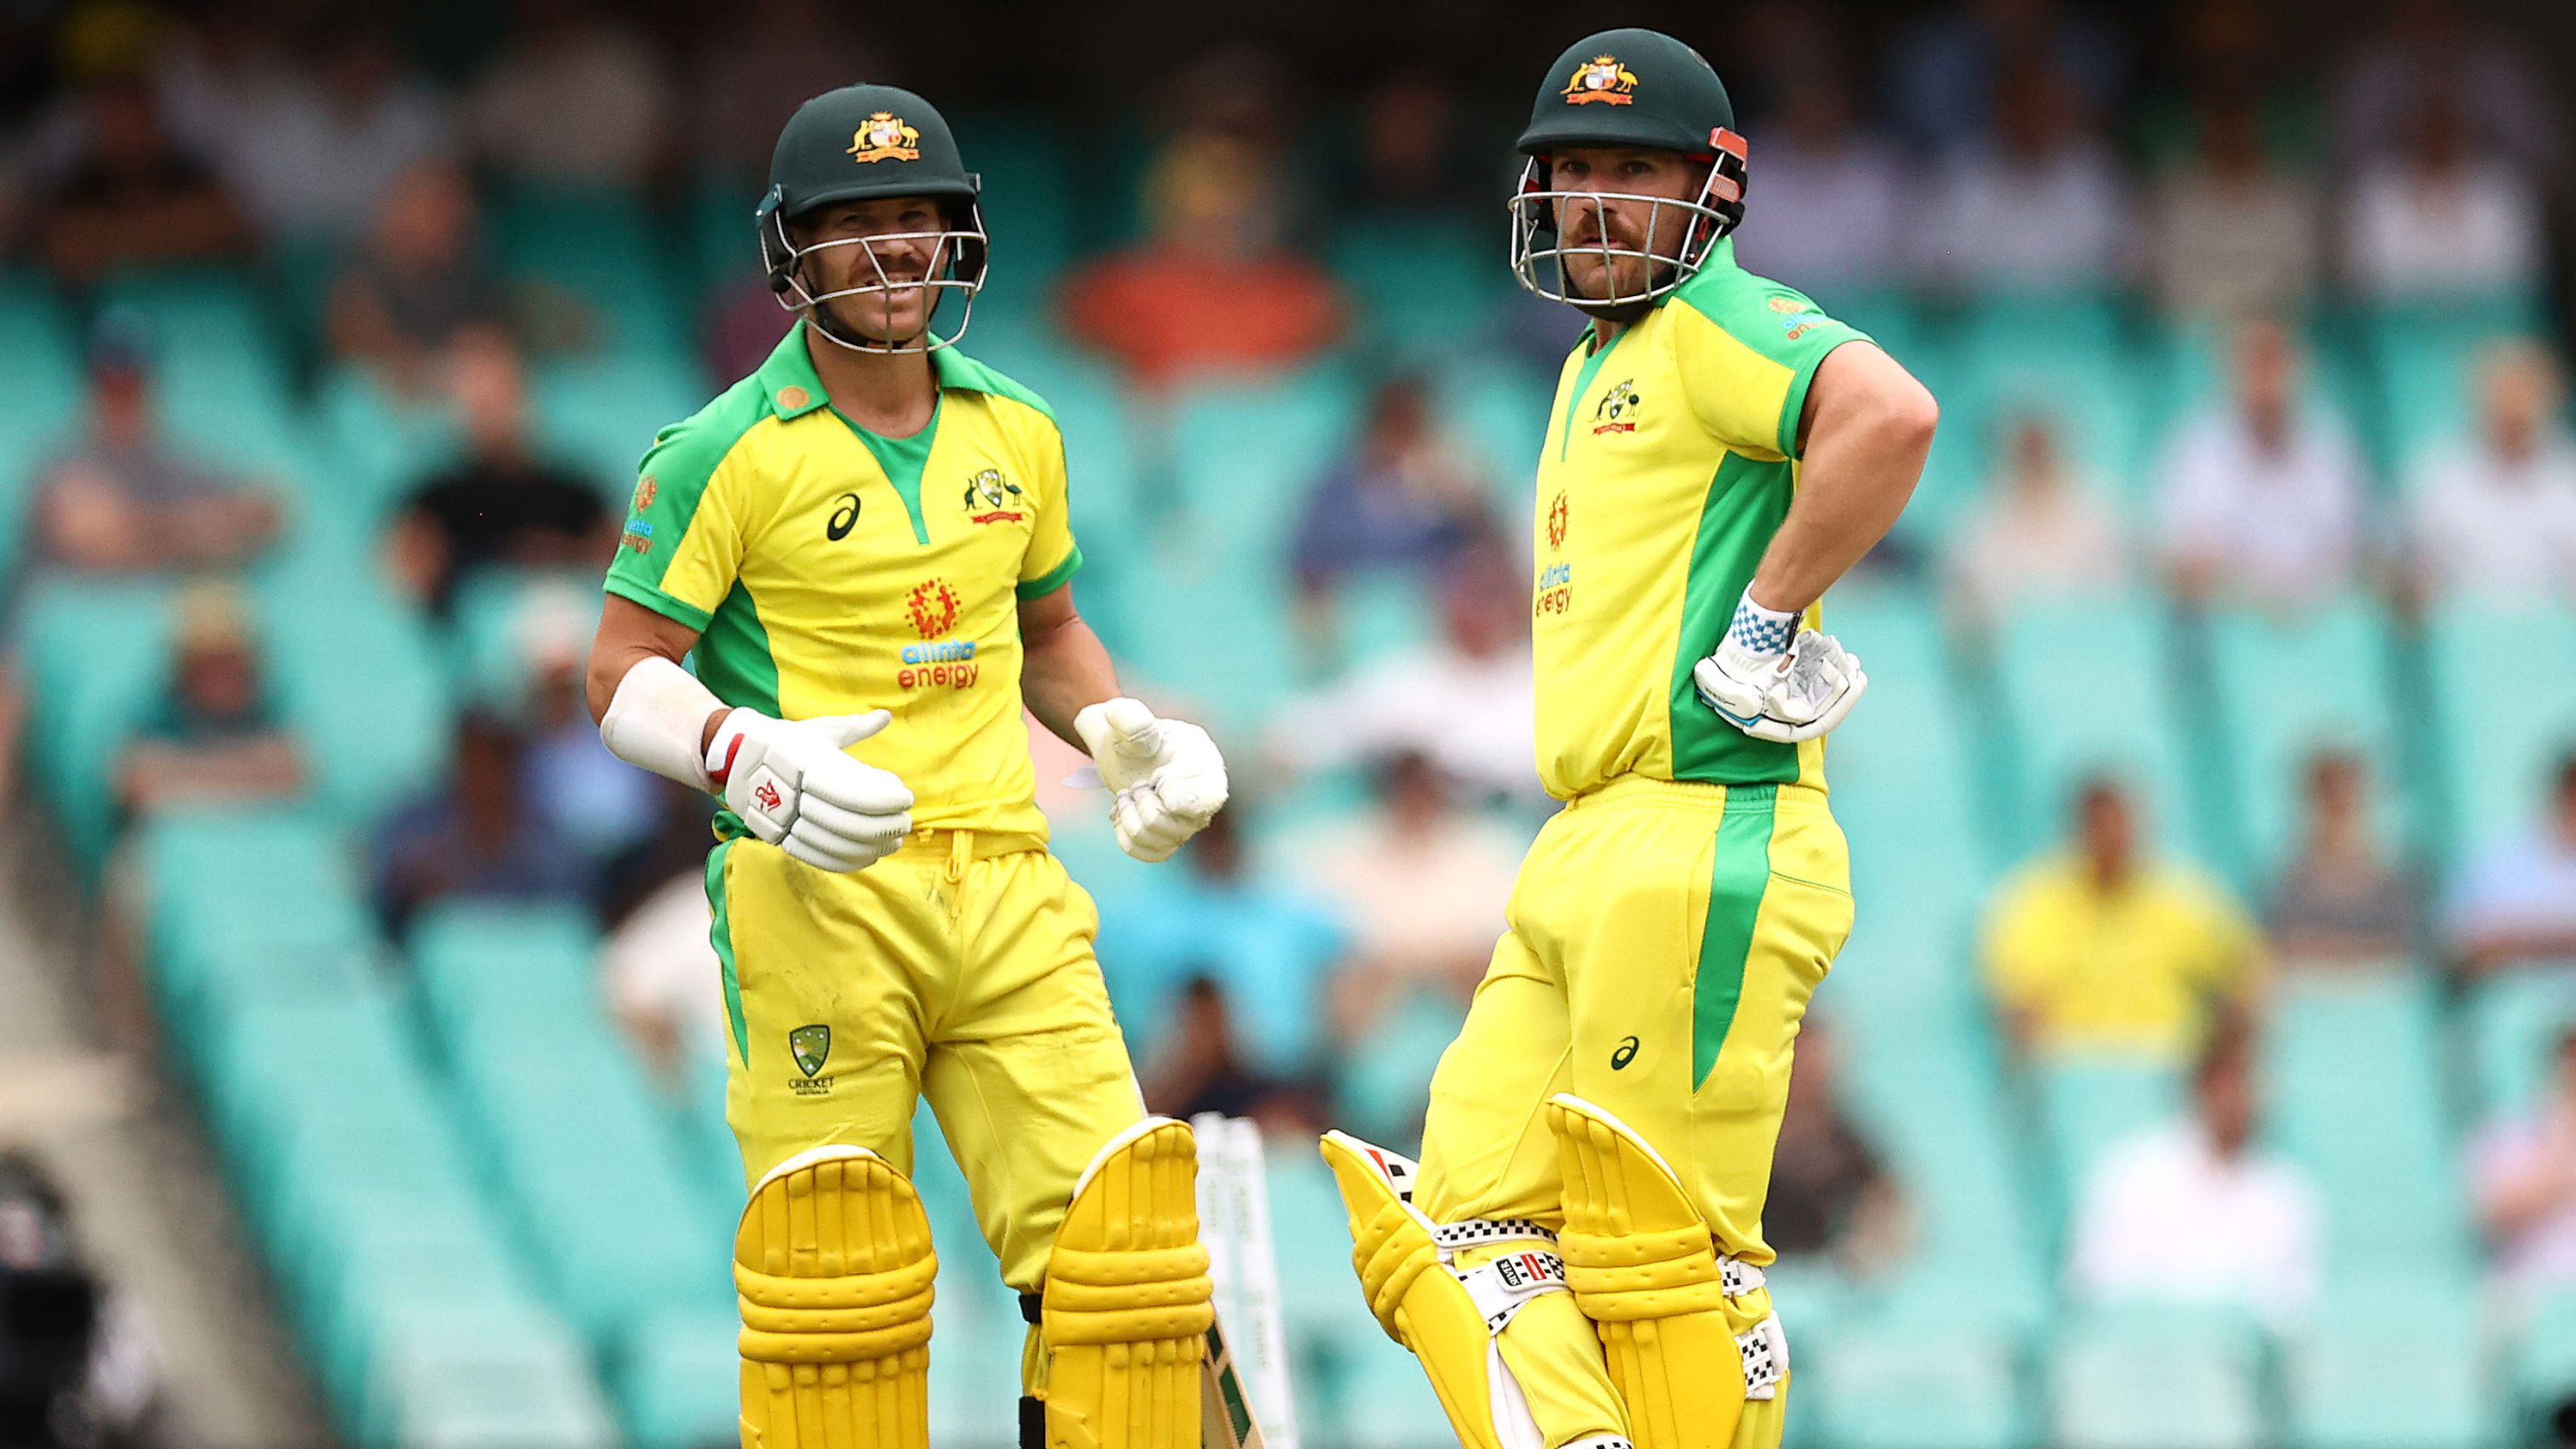 Aaron Finch endorses David Warner as Australia's next ODI captain after announcing retirement